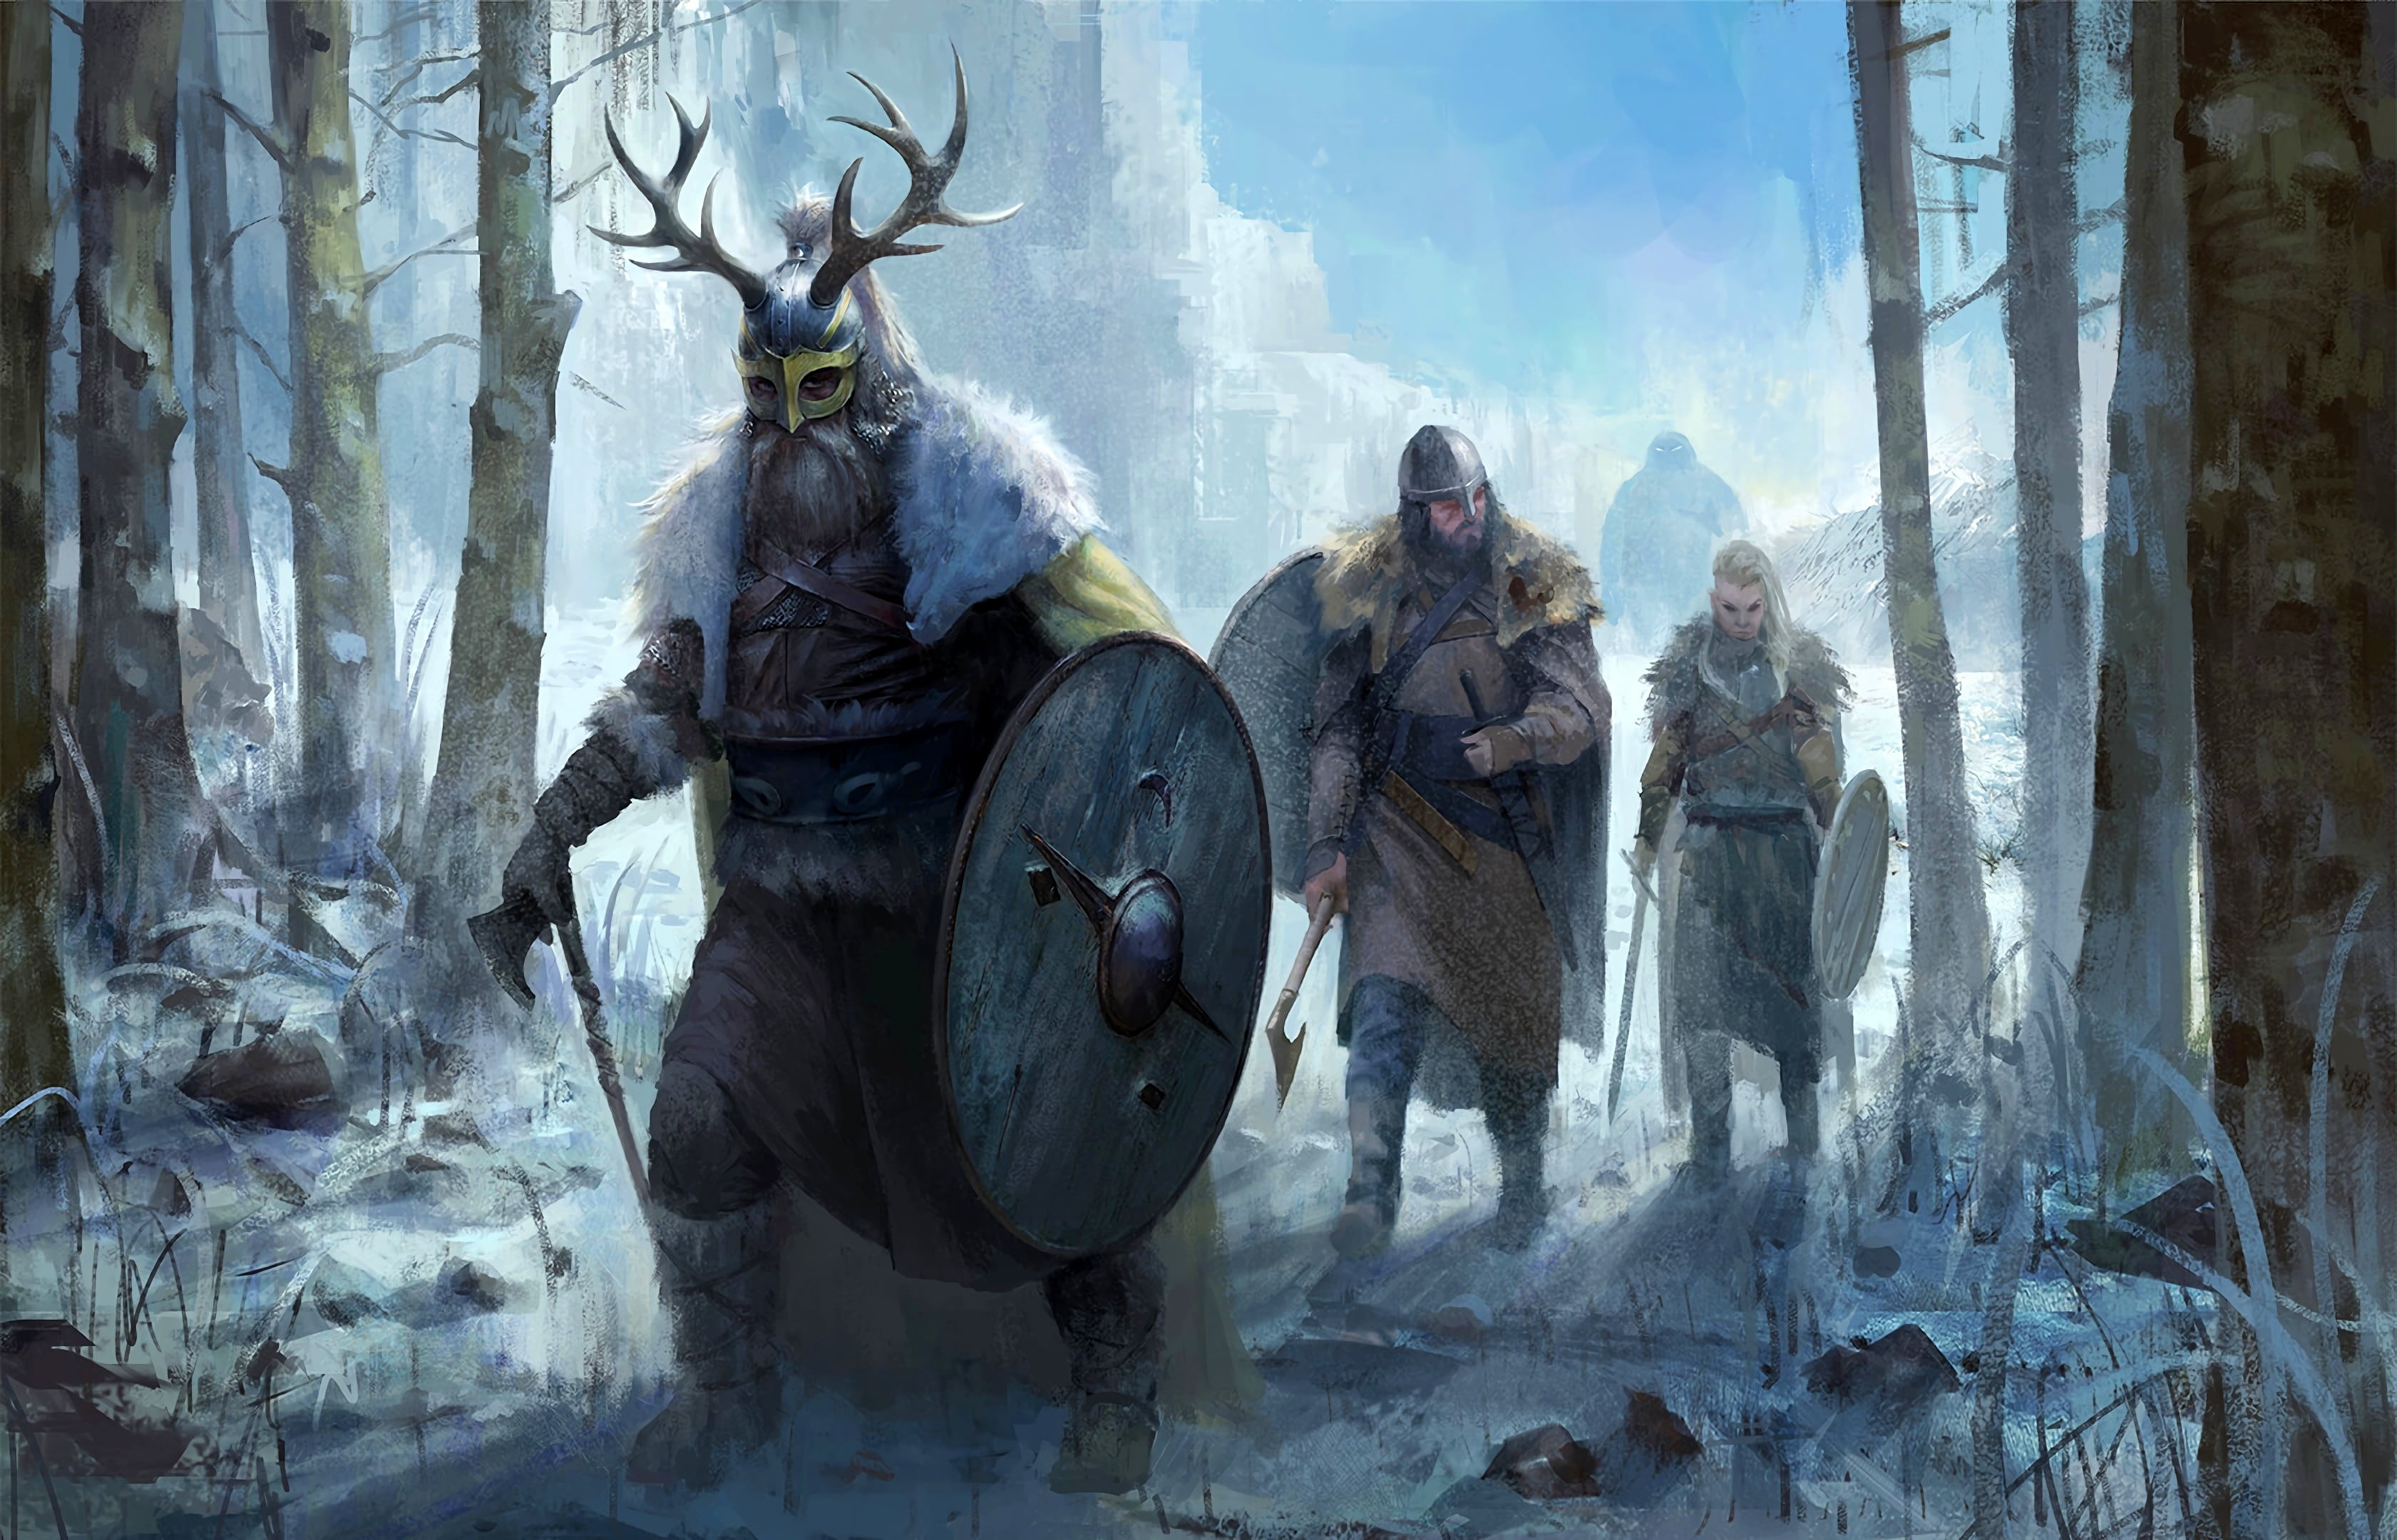 Trees, Snow, Helmet, Shield, The Vikings, Battle axe